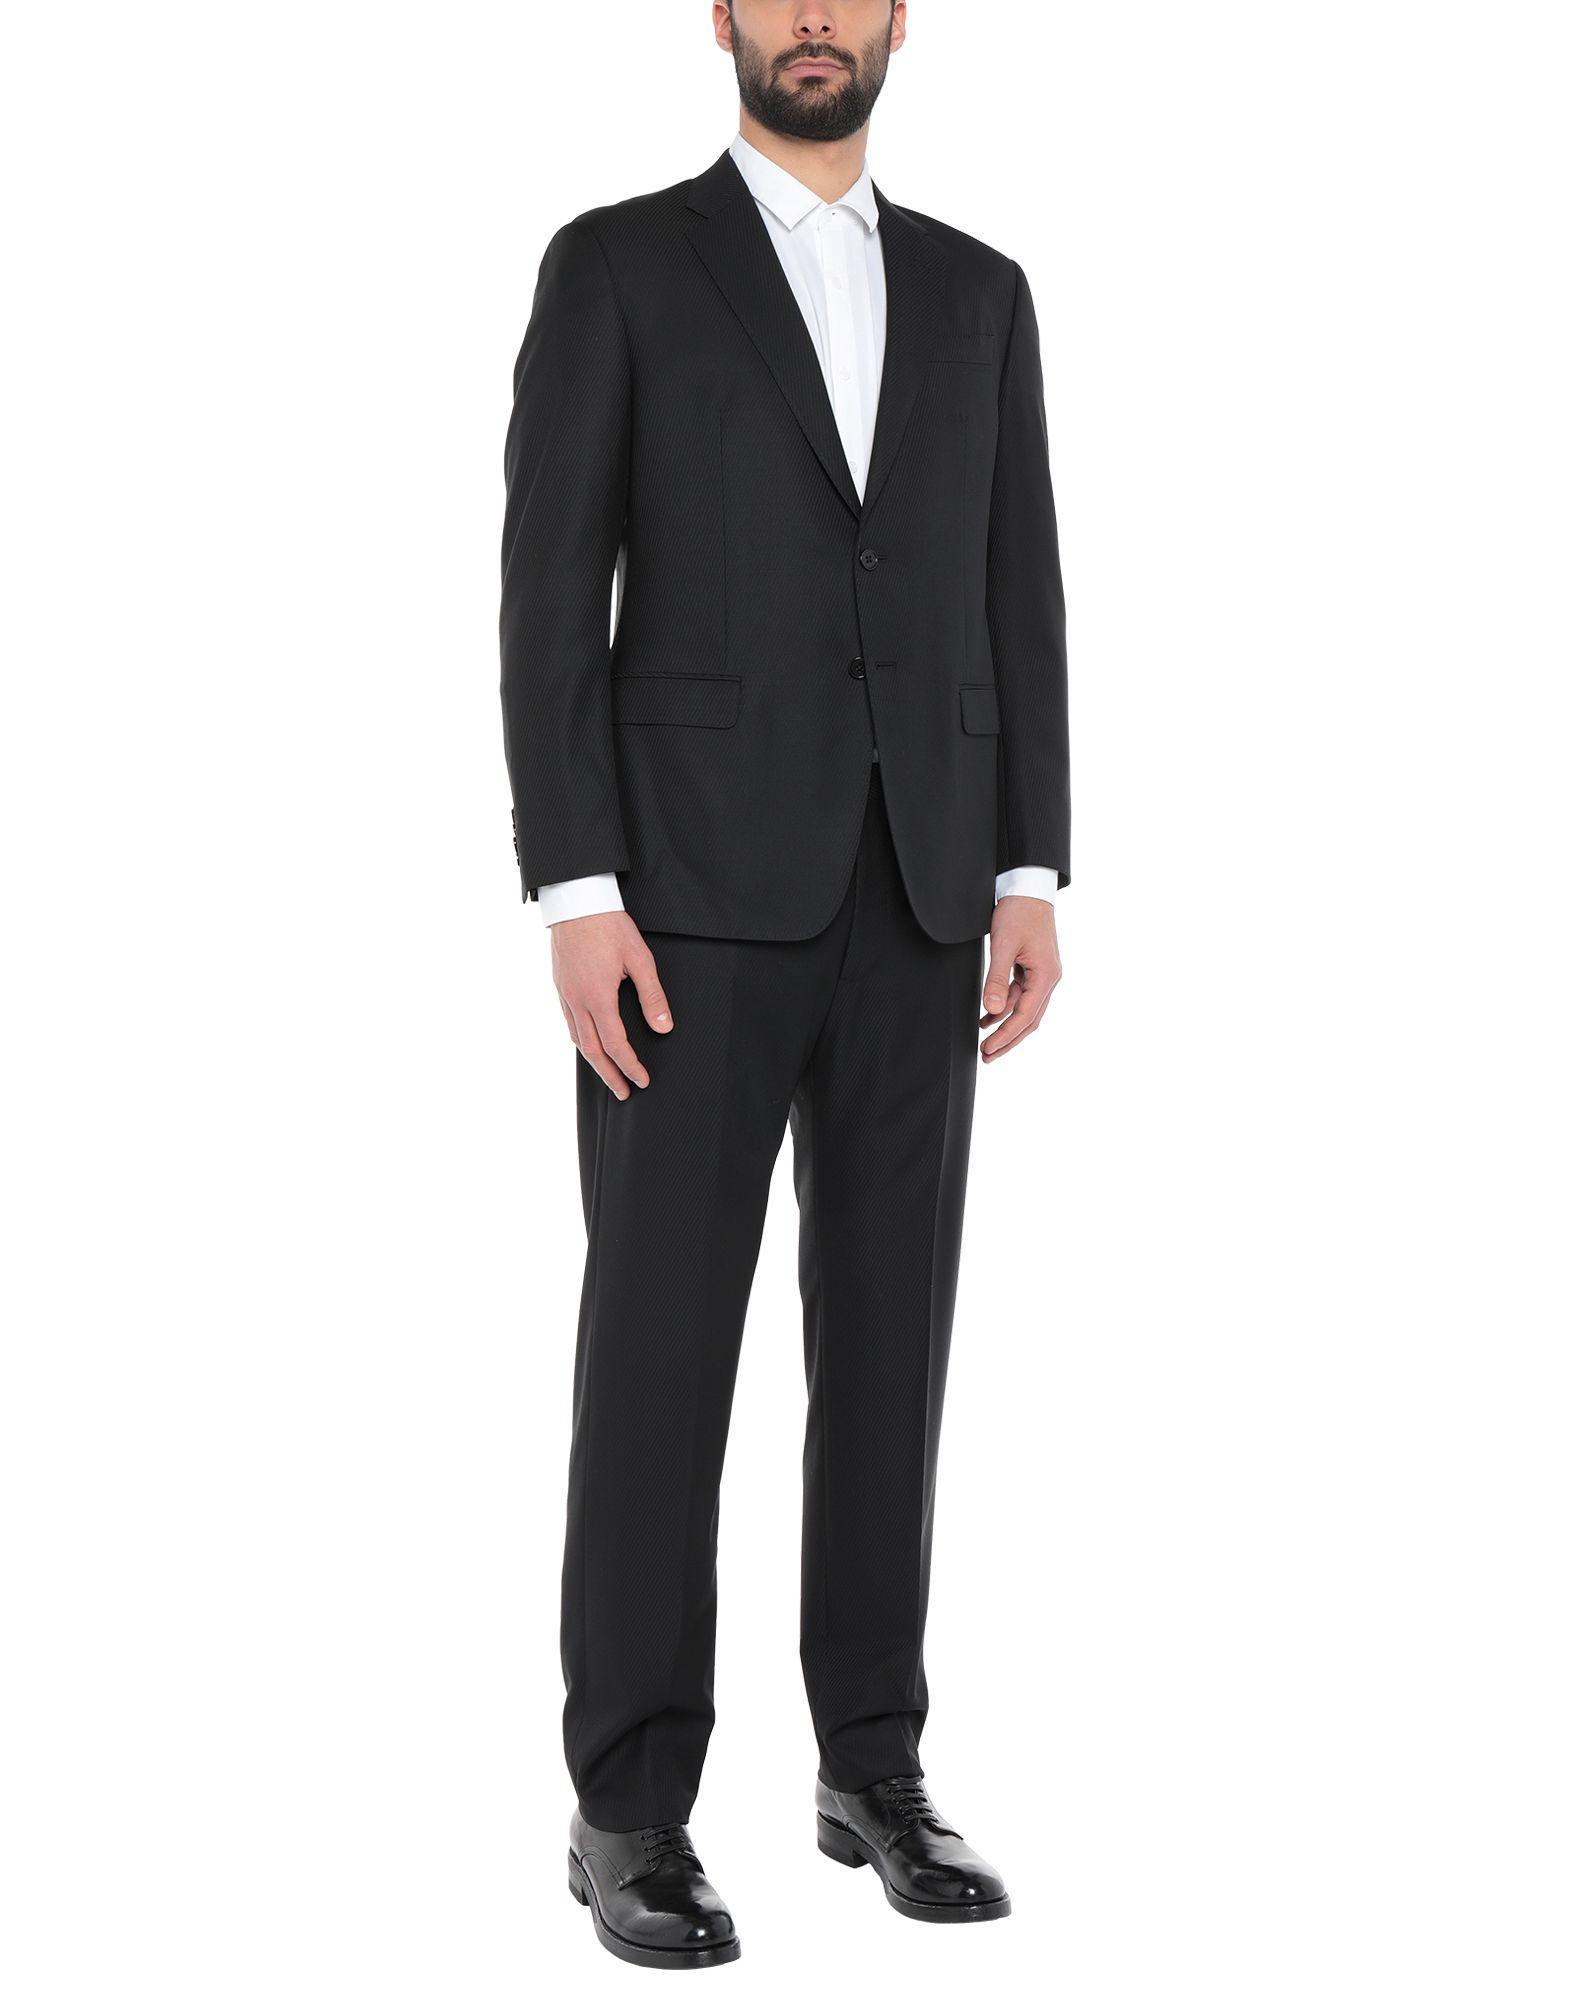 Giorgio Armani Suit in Black for Men - Lyst